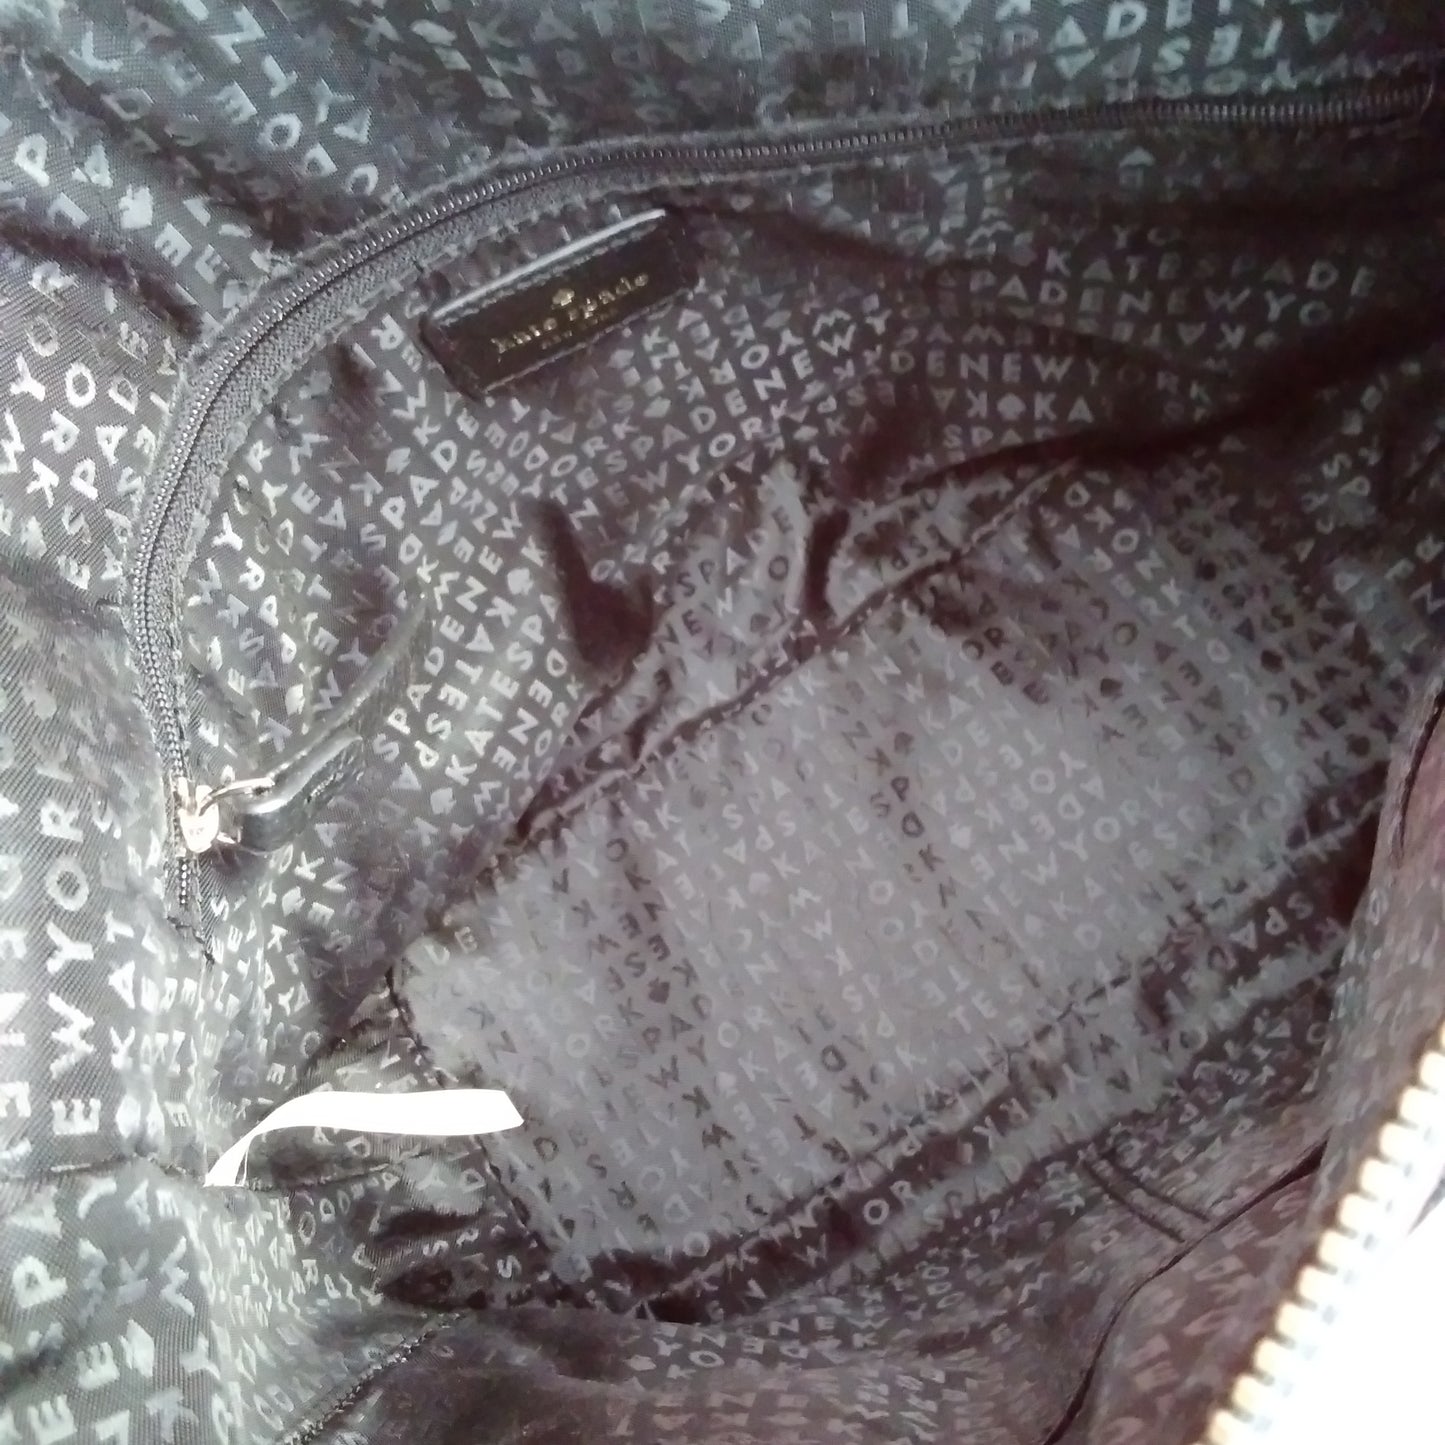 Kate Spade Black Leather Crossbody Bag